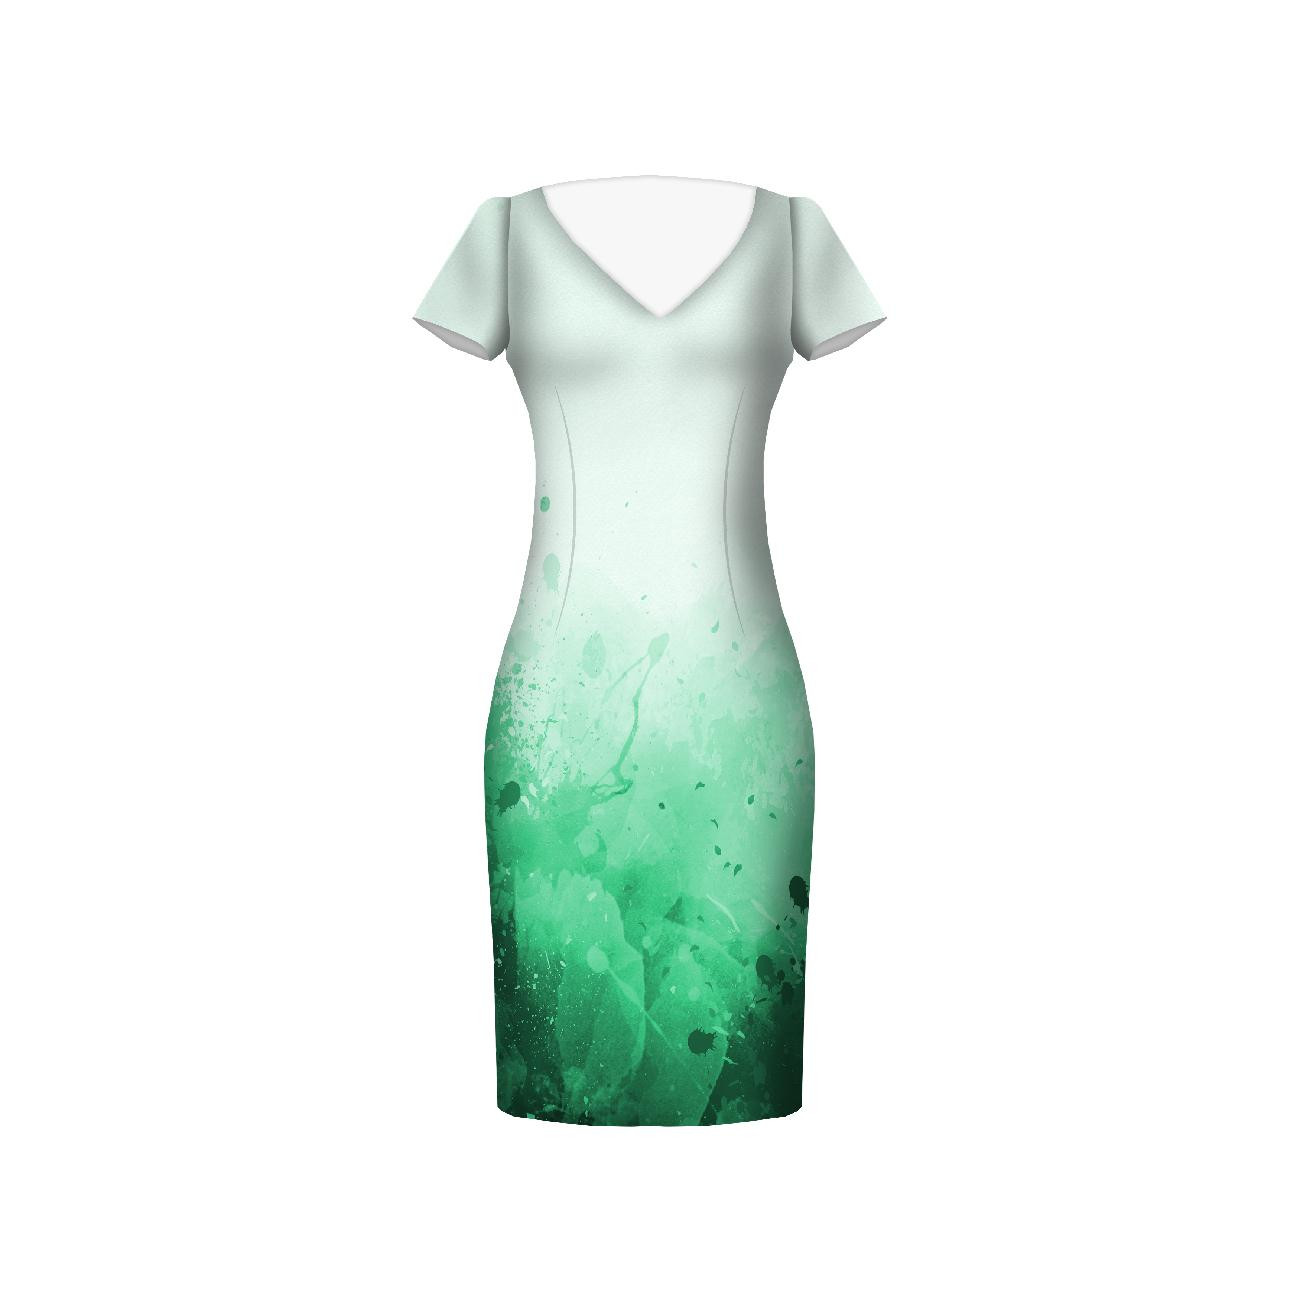 KLECKSE (grün) - Kleid-Panel Baumwoll Musselin